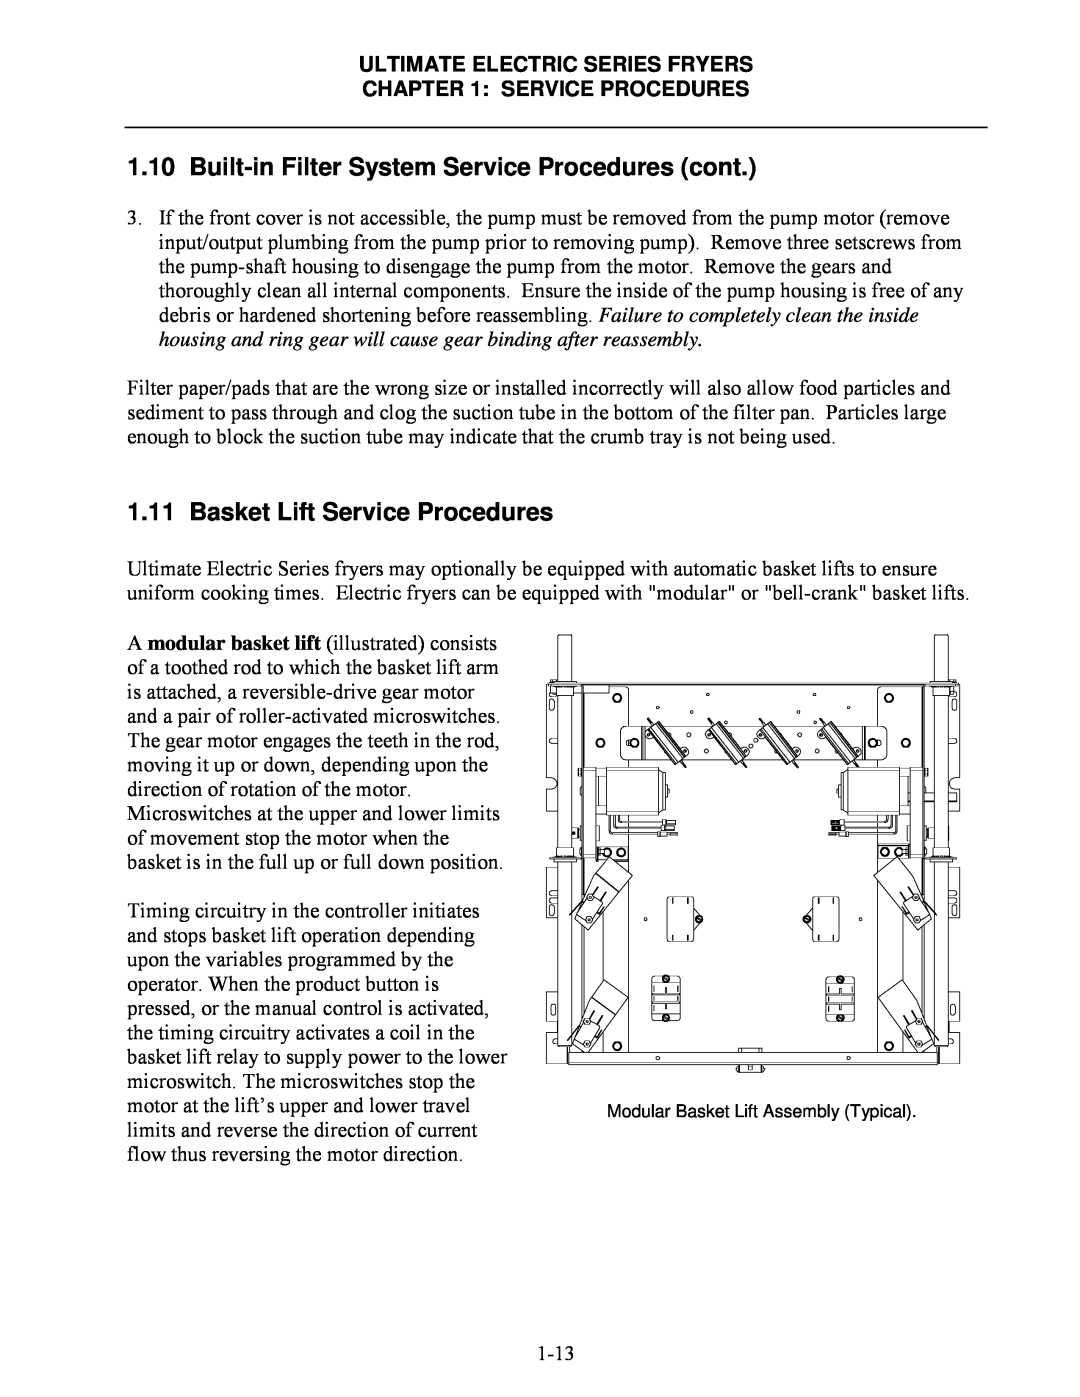 Frymaster manual Basket Lift Service Procedures, Ultimate Electric Series Fryers 